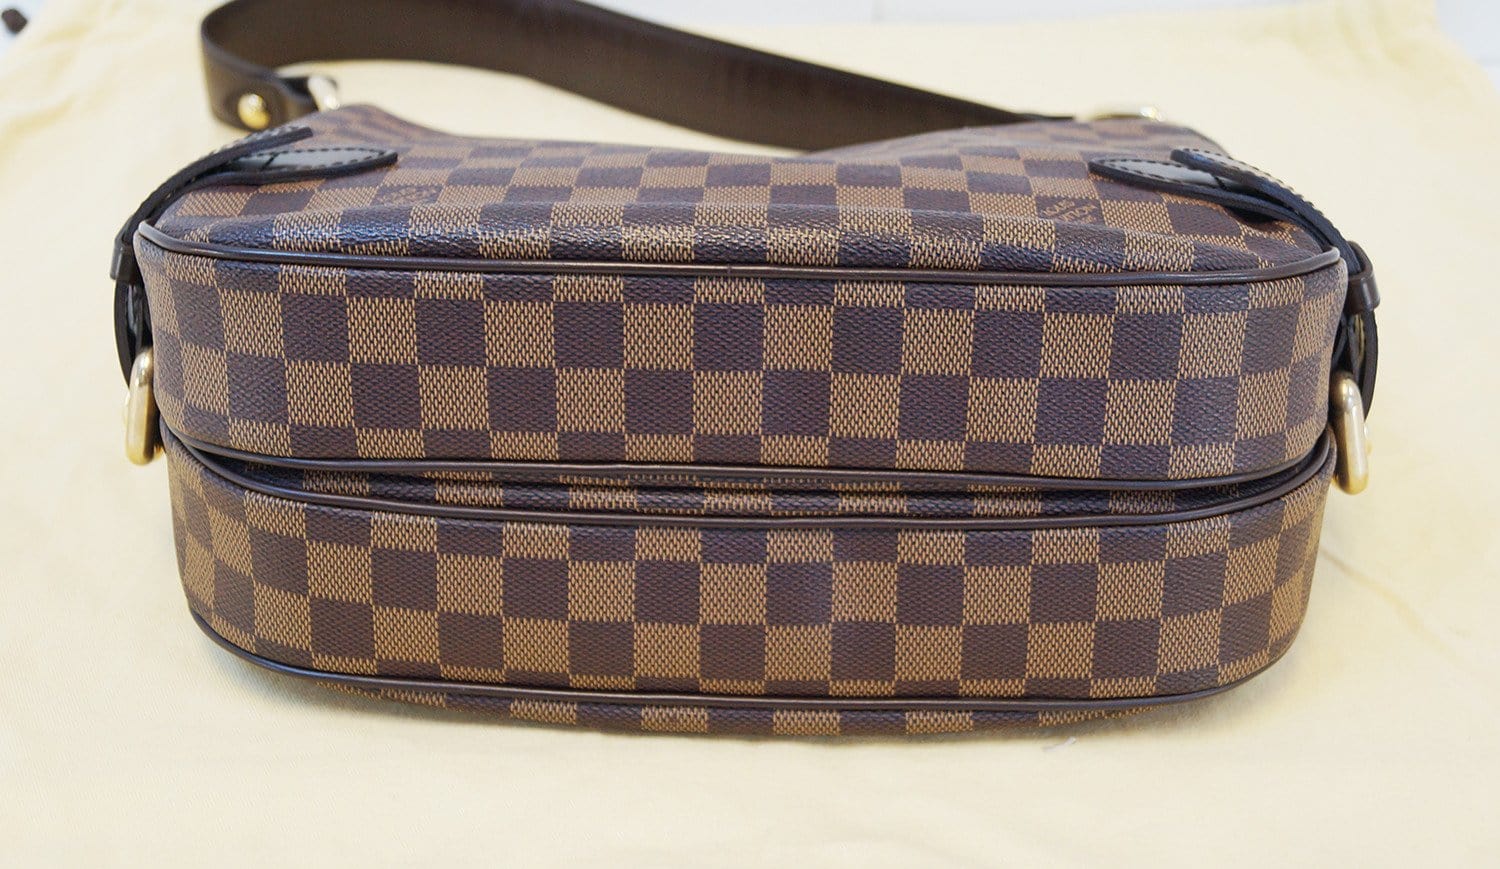 Louis Vuitton Highbury Damier Ebene Canvas Shoulder Bag on SALE